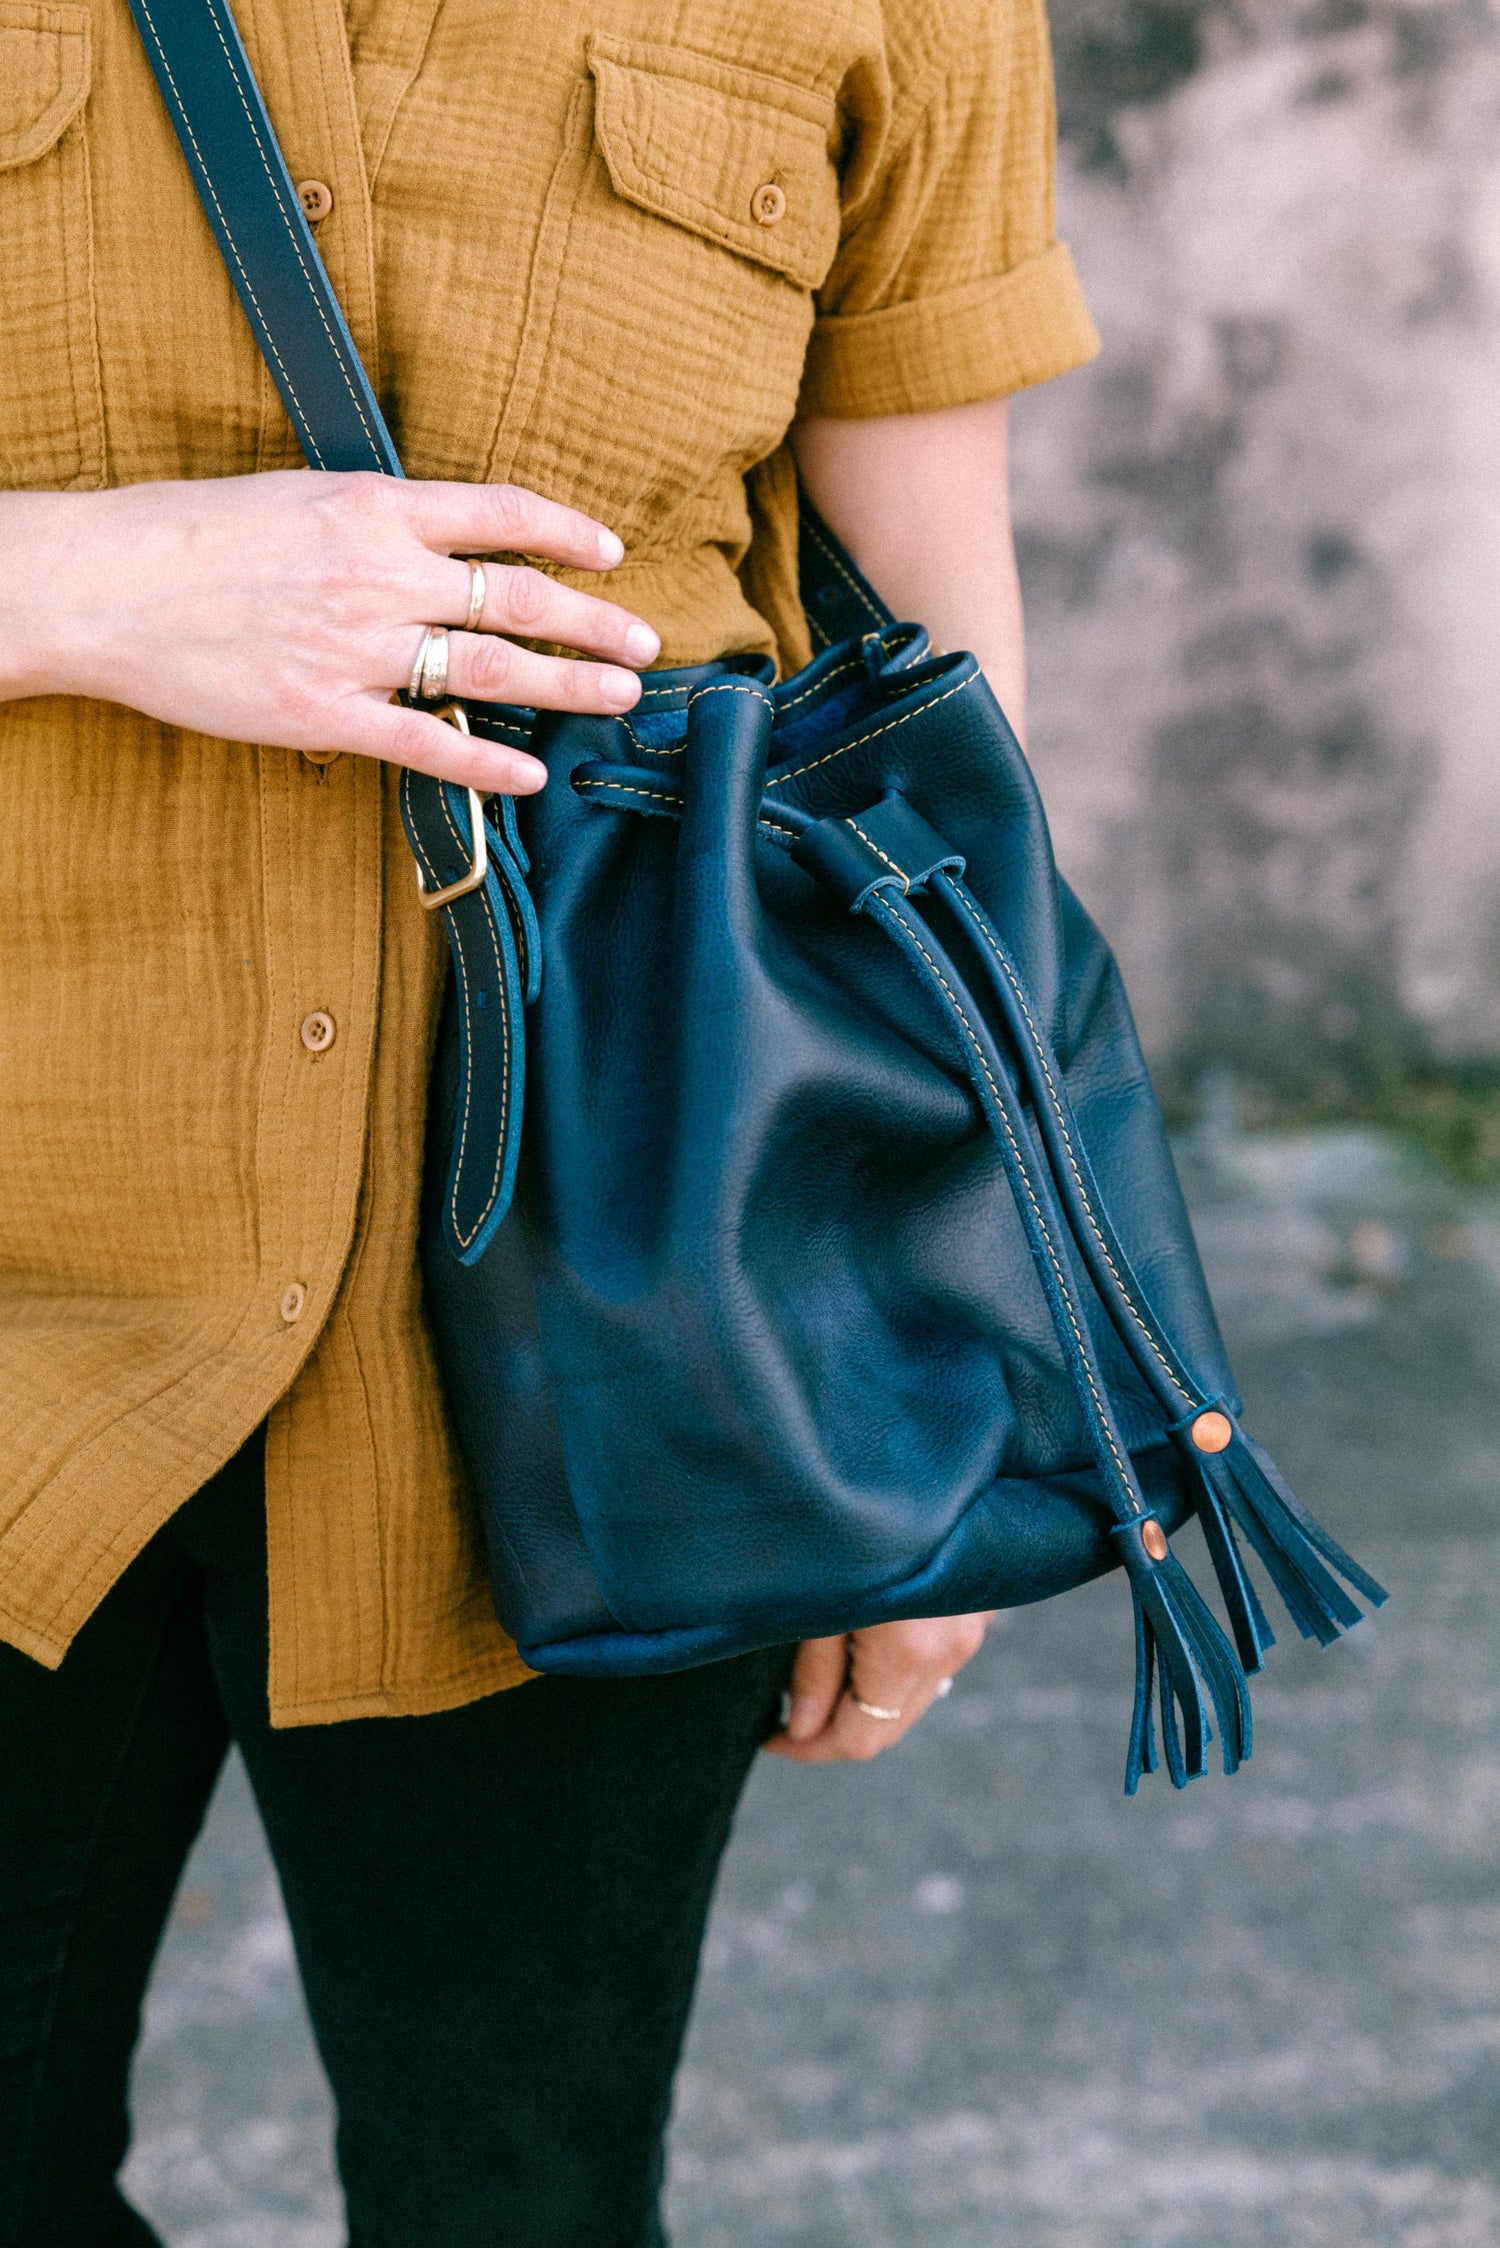 Madewell Women’s Brown Leather Drawstring Bucket Bag Handbag Tote